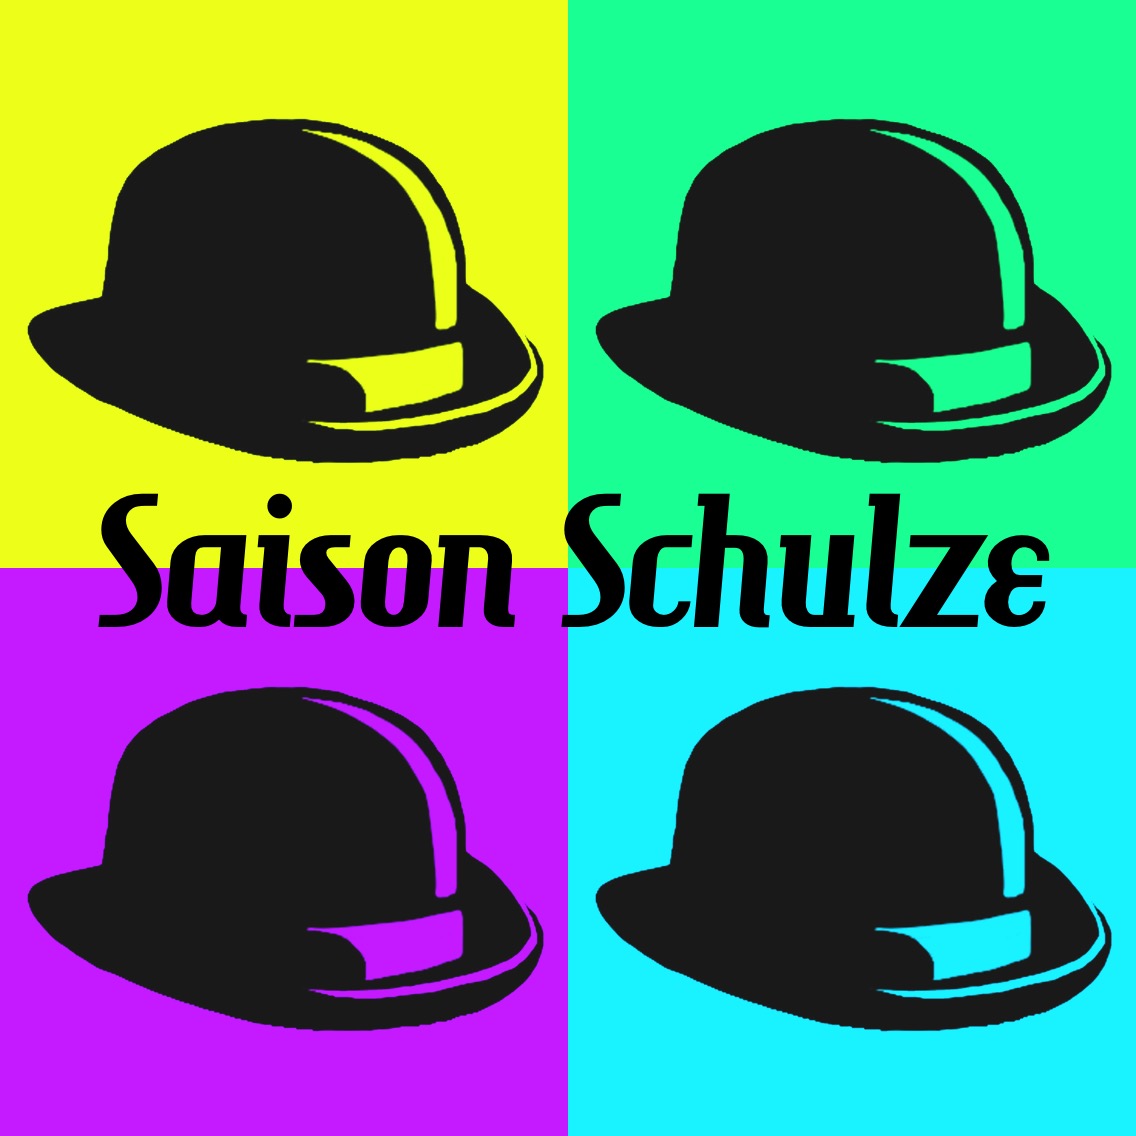 Saison Schulze